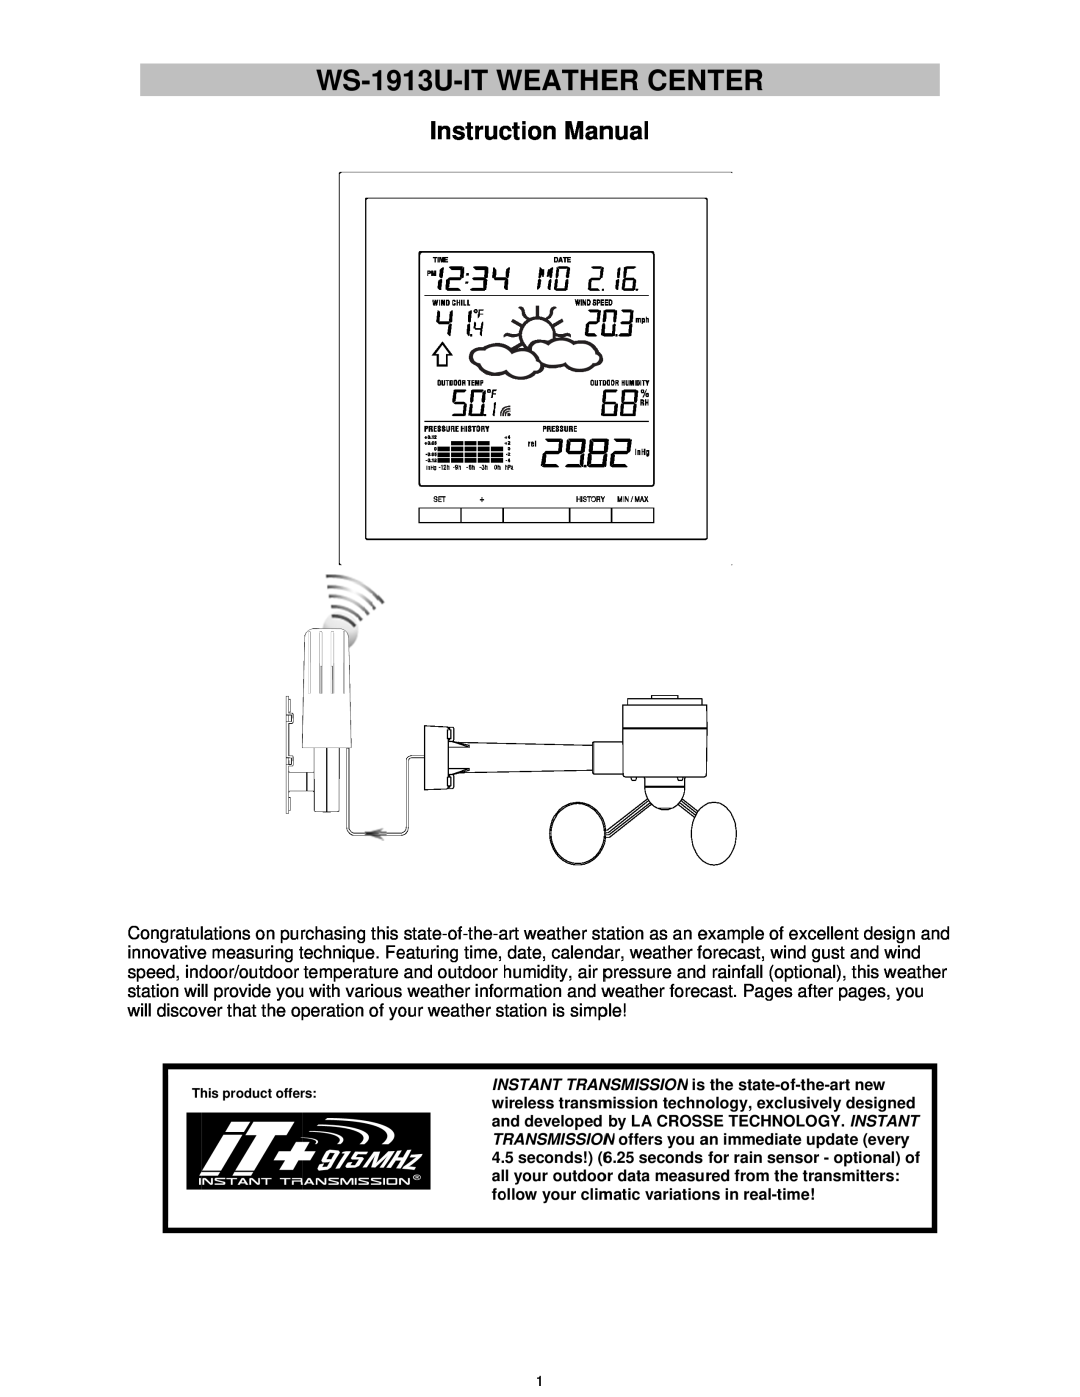 La Crosse Technology manual WS-1913U-IT WEATHER CENTER, Instruction Manual 